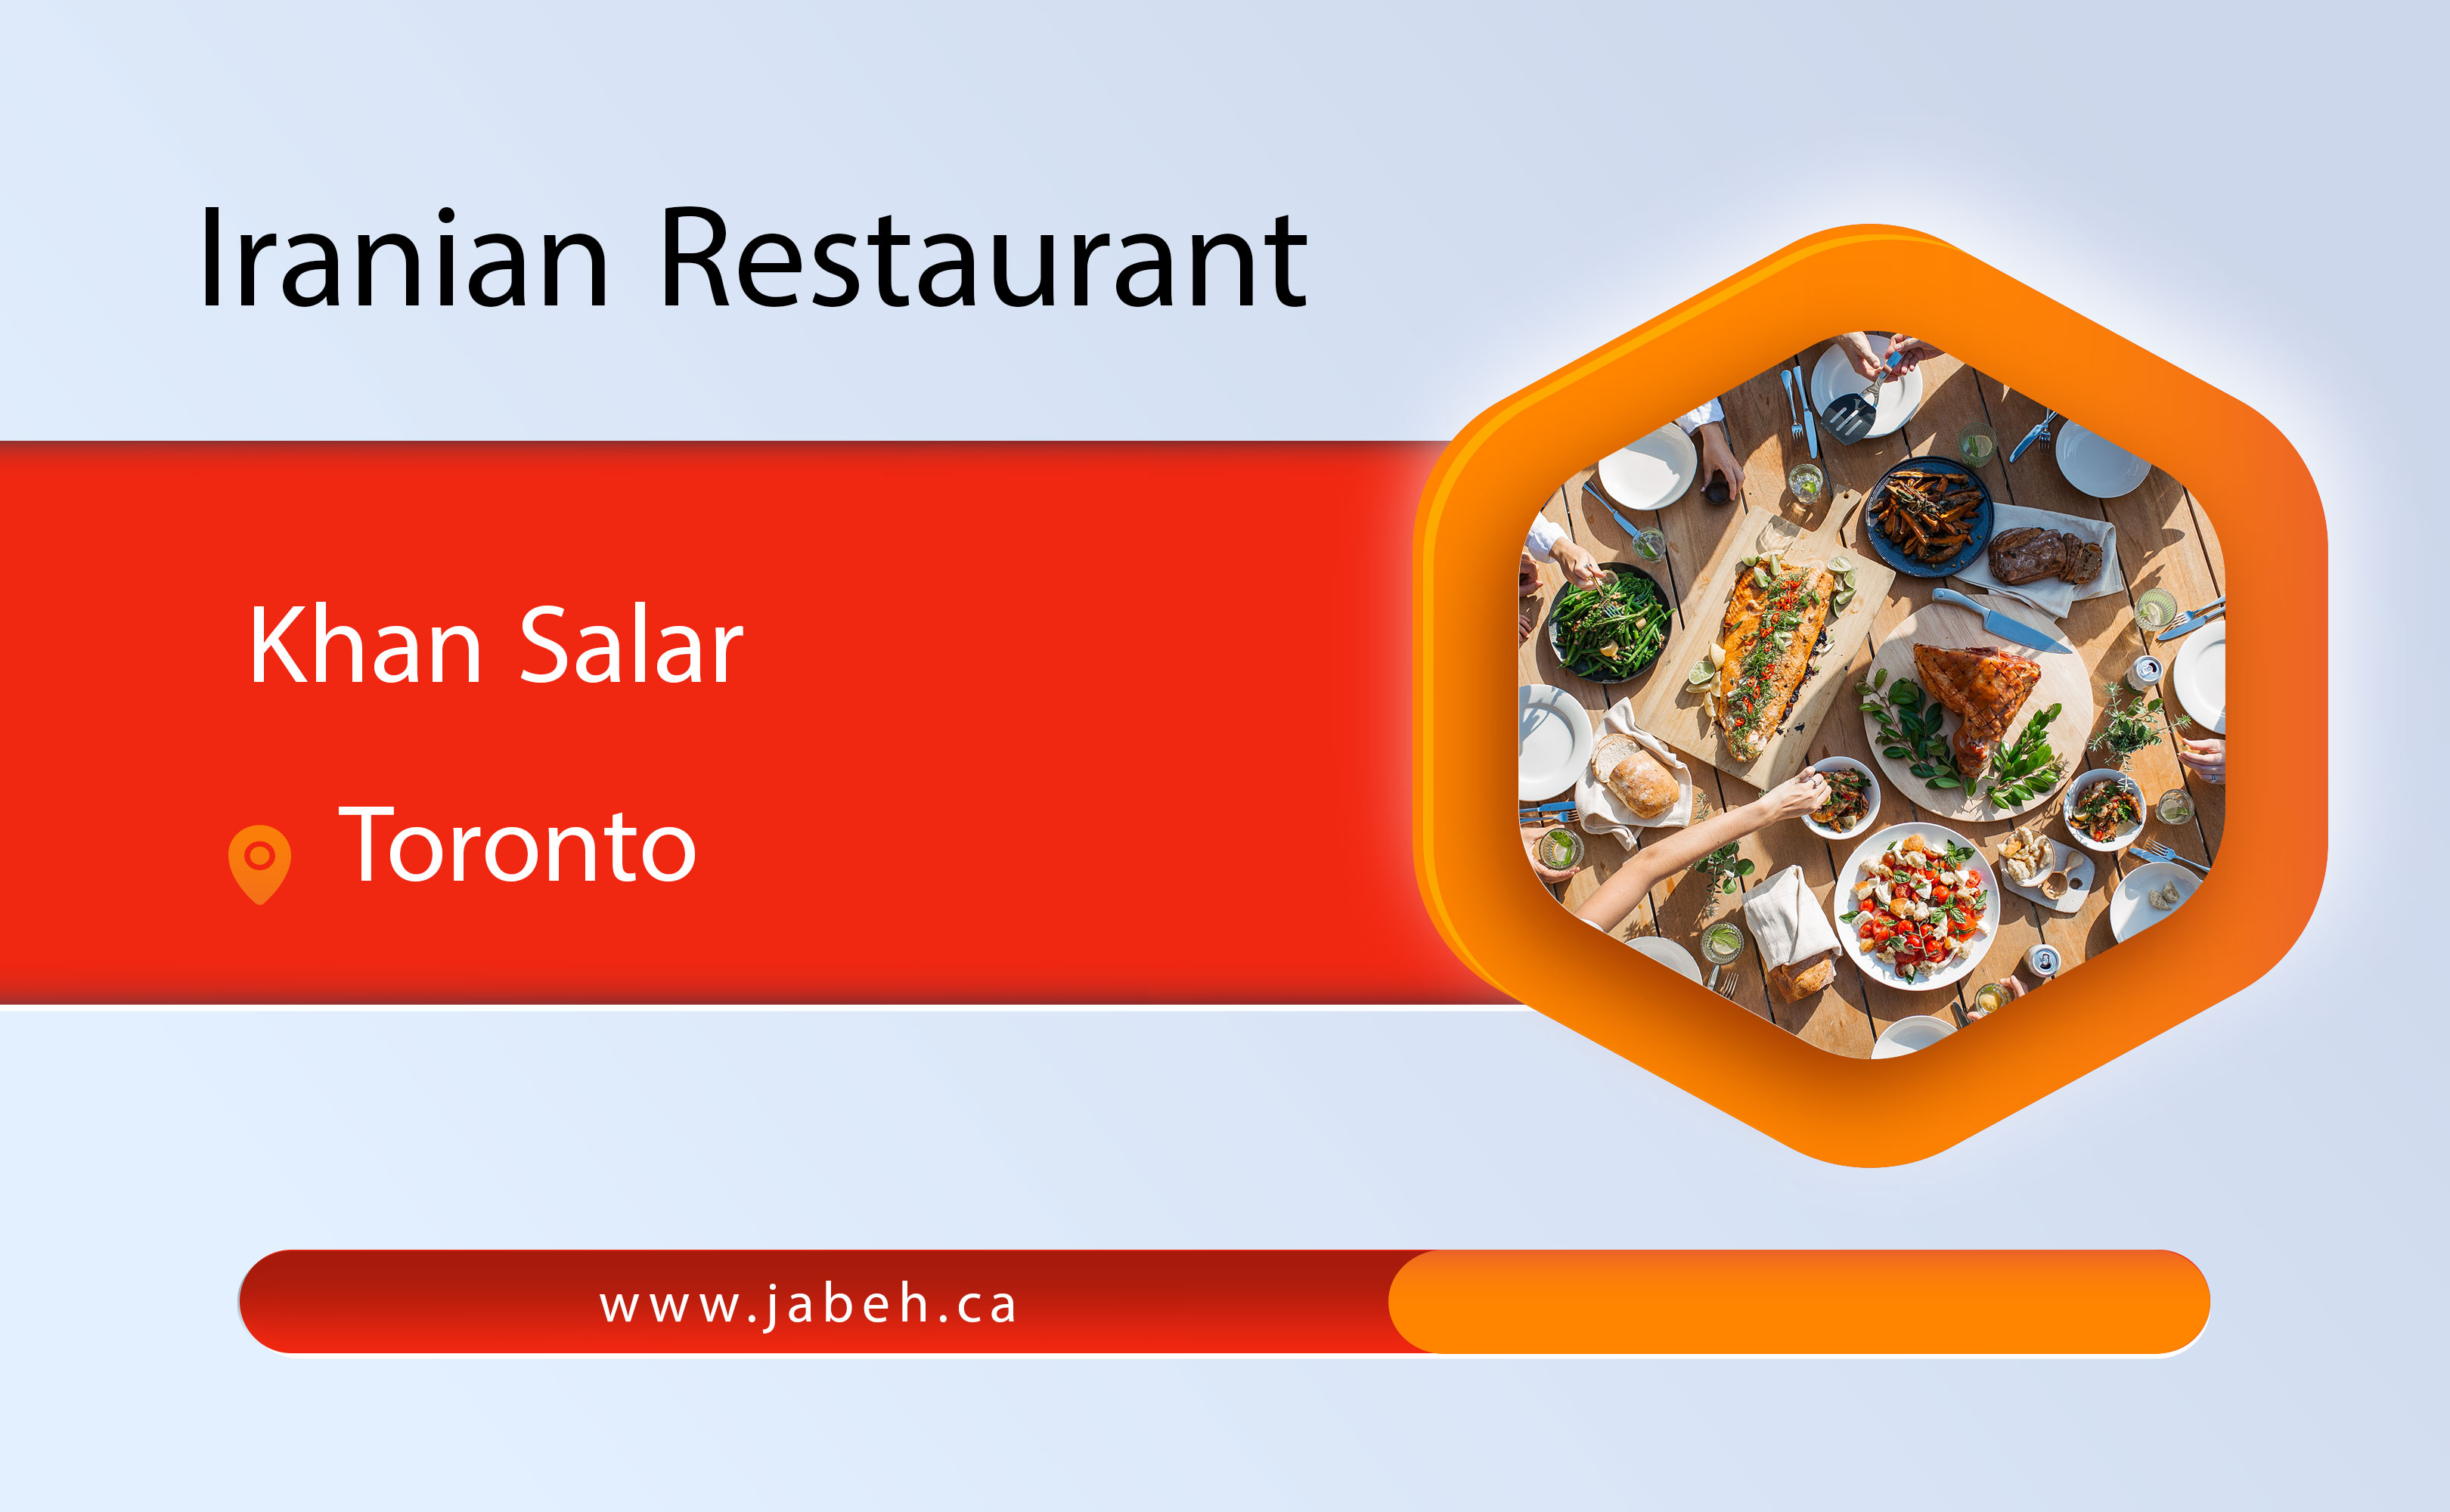 Khan Salar Iranian Restaurant in Toronto